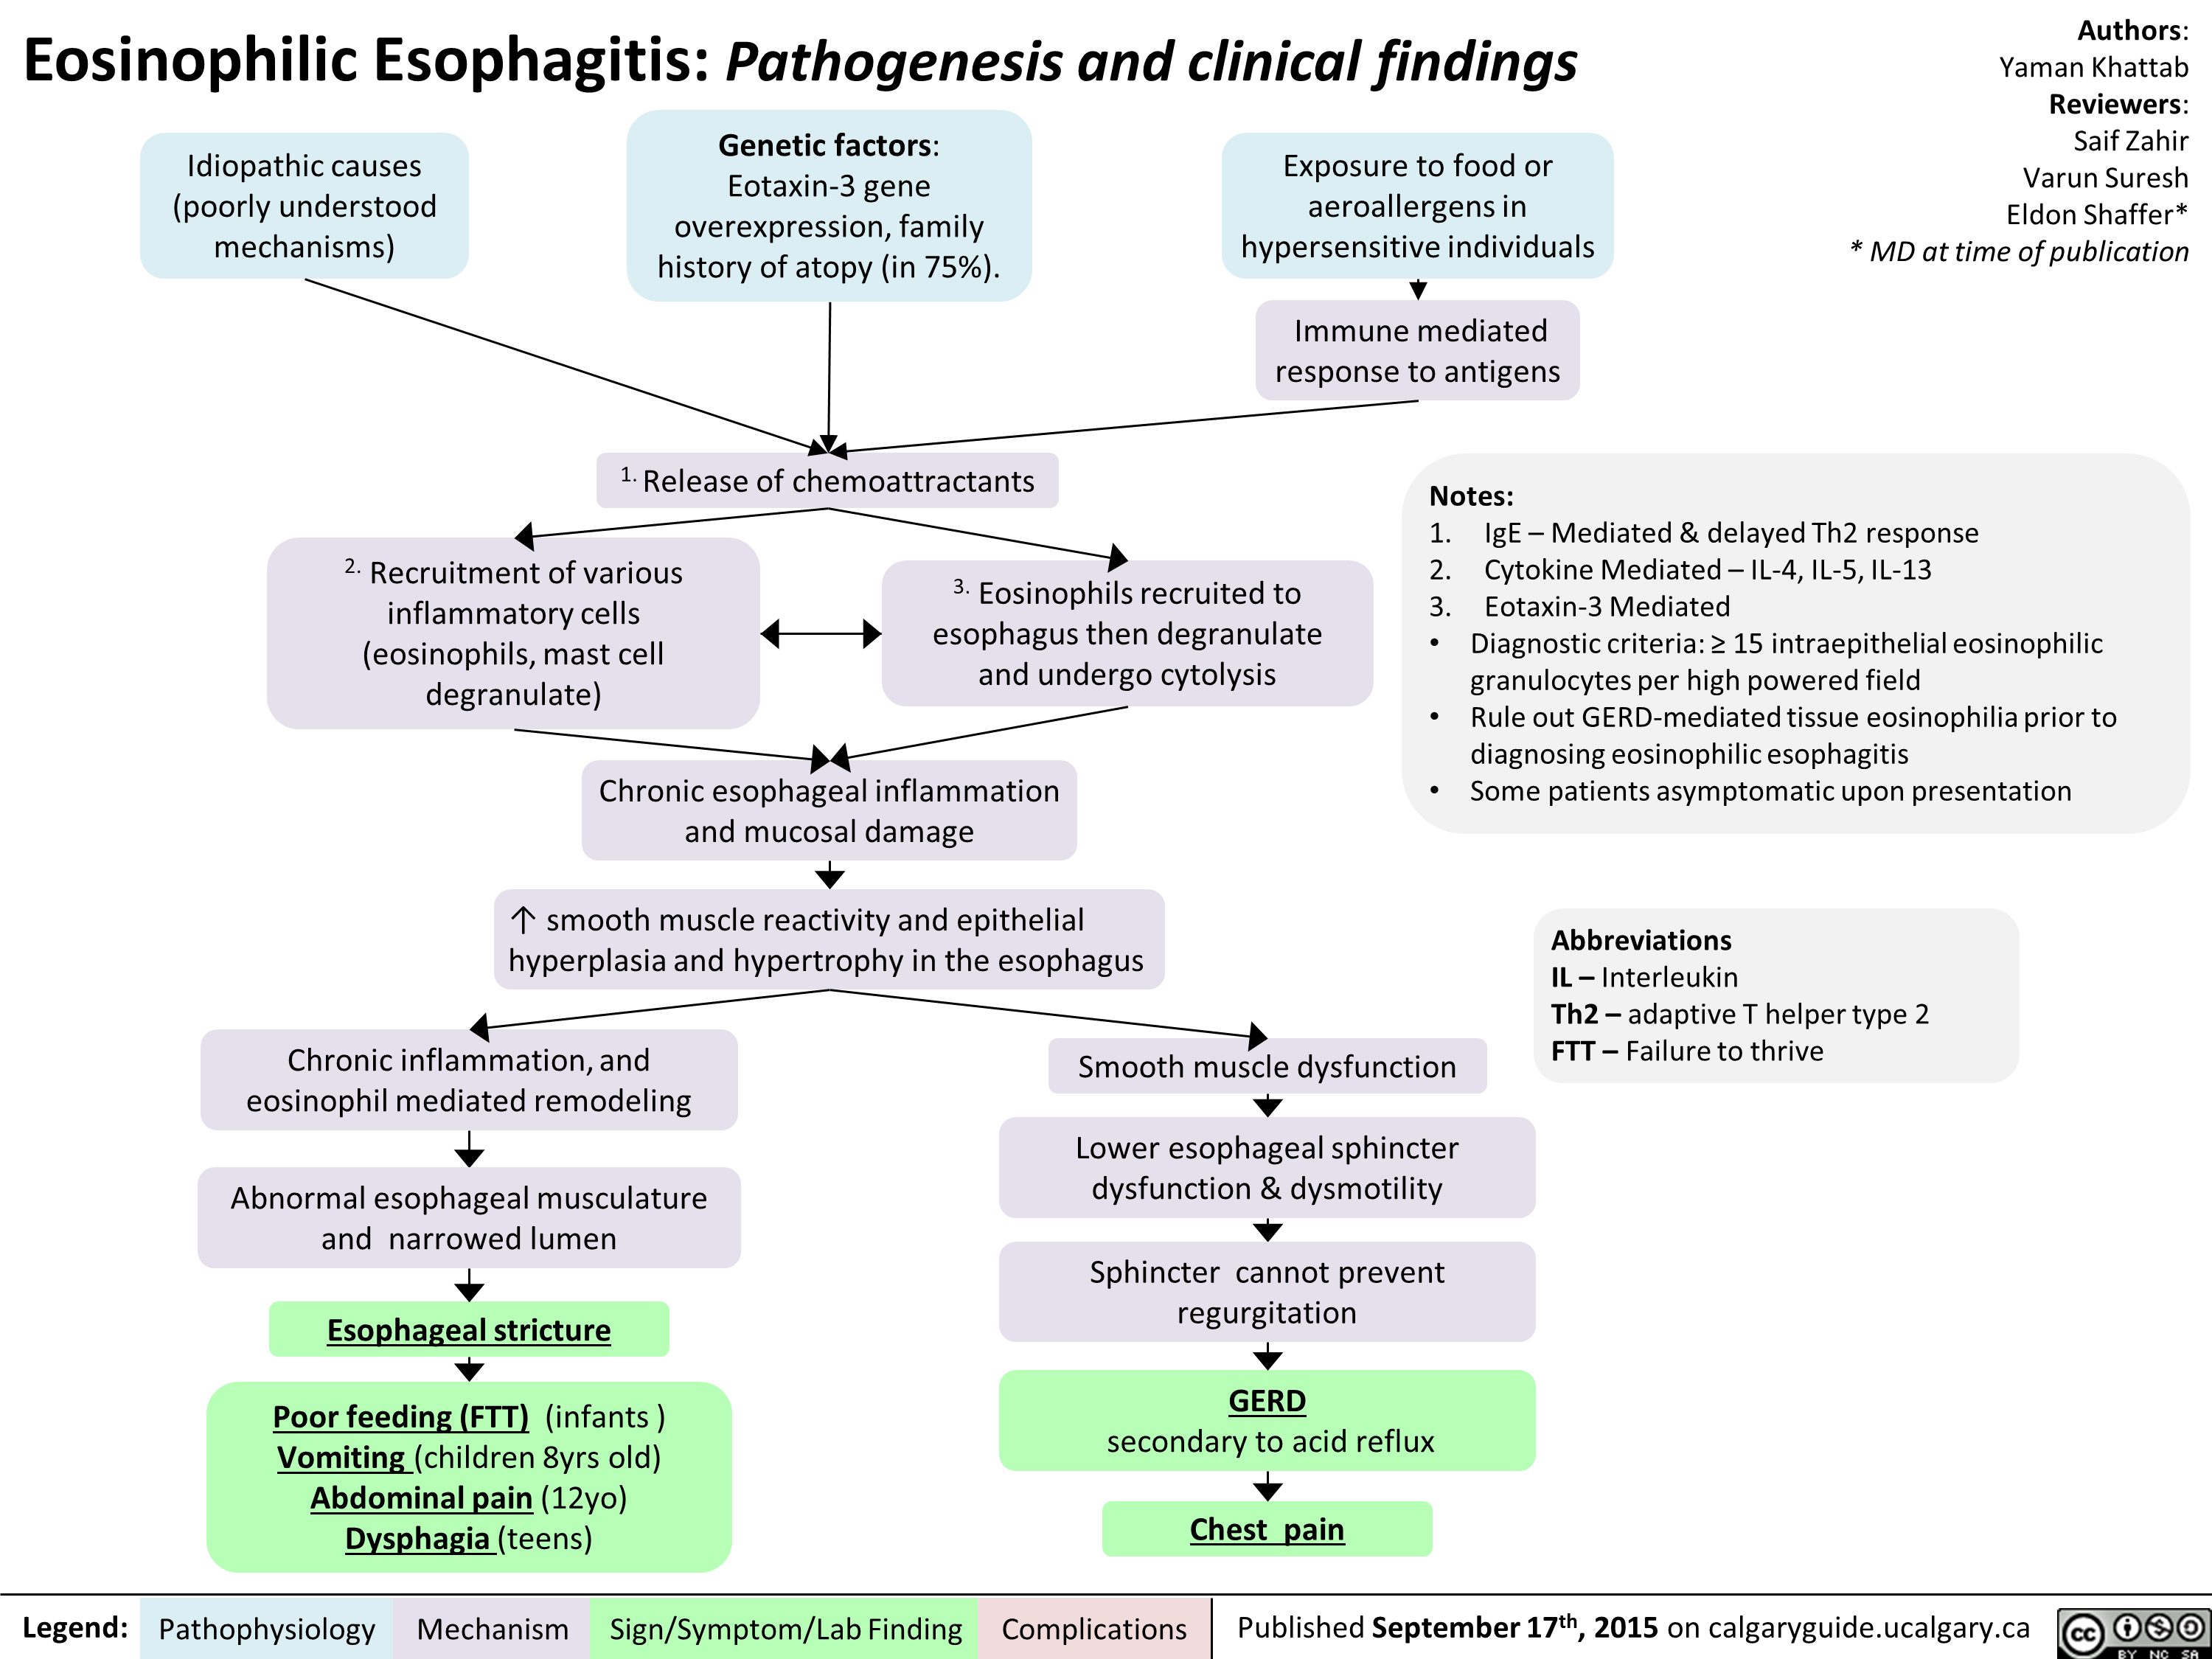 Eosinophillic Esophagitis -Kattab Yaman - Final For Publication